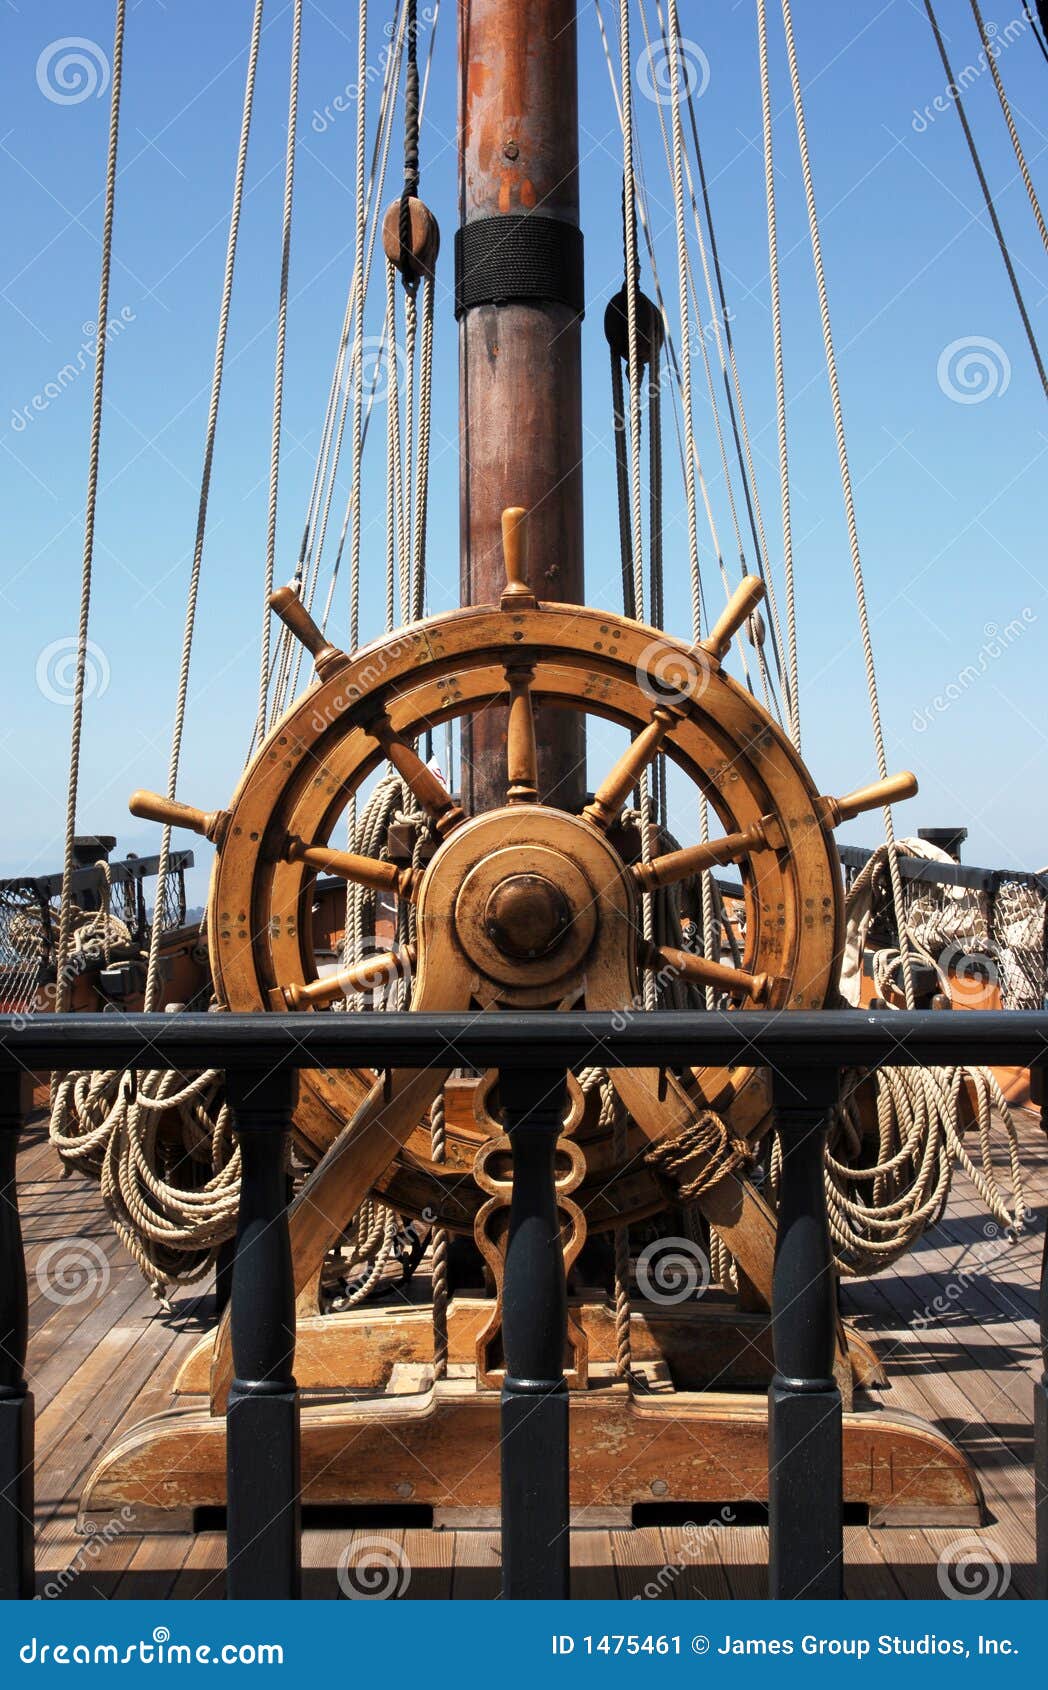 Ship's Helm Stock Image - Image: 1475461